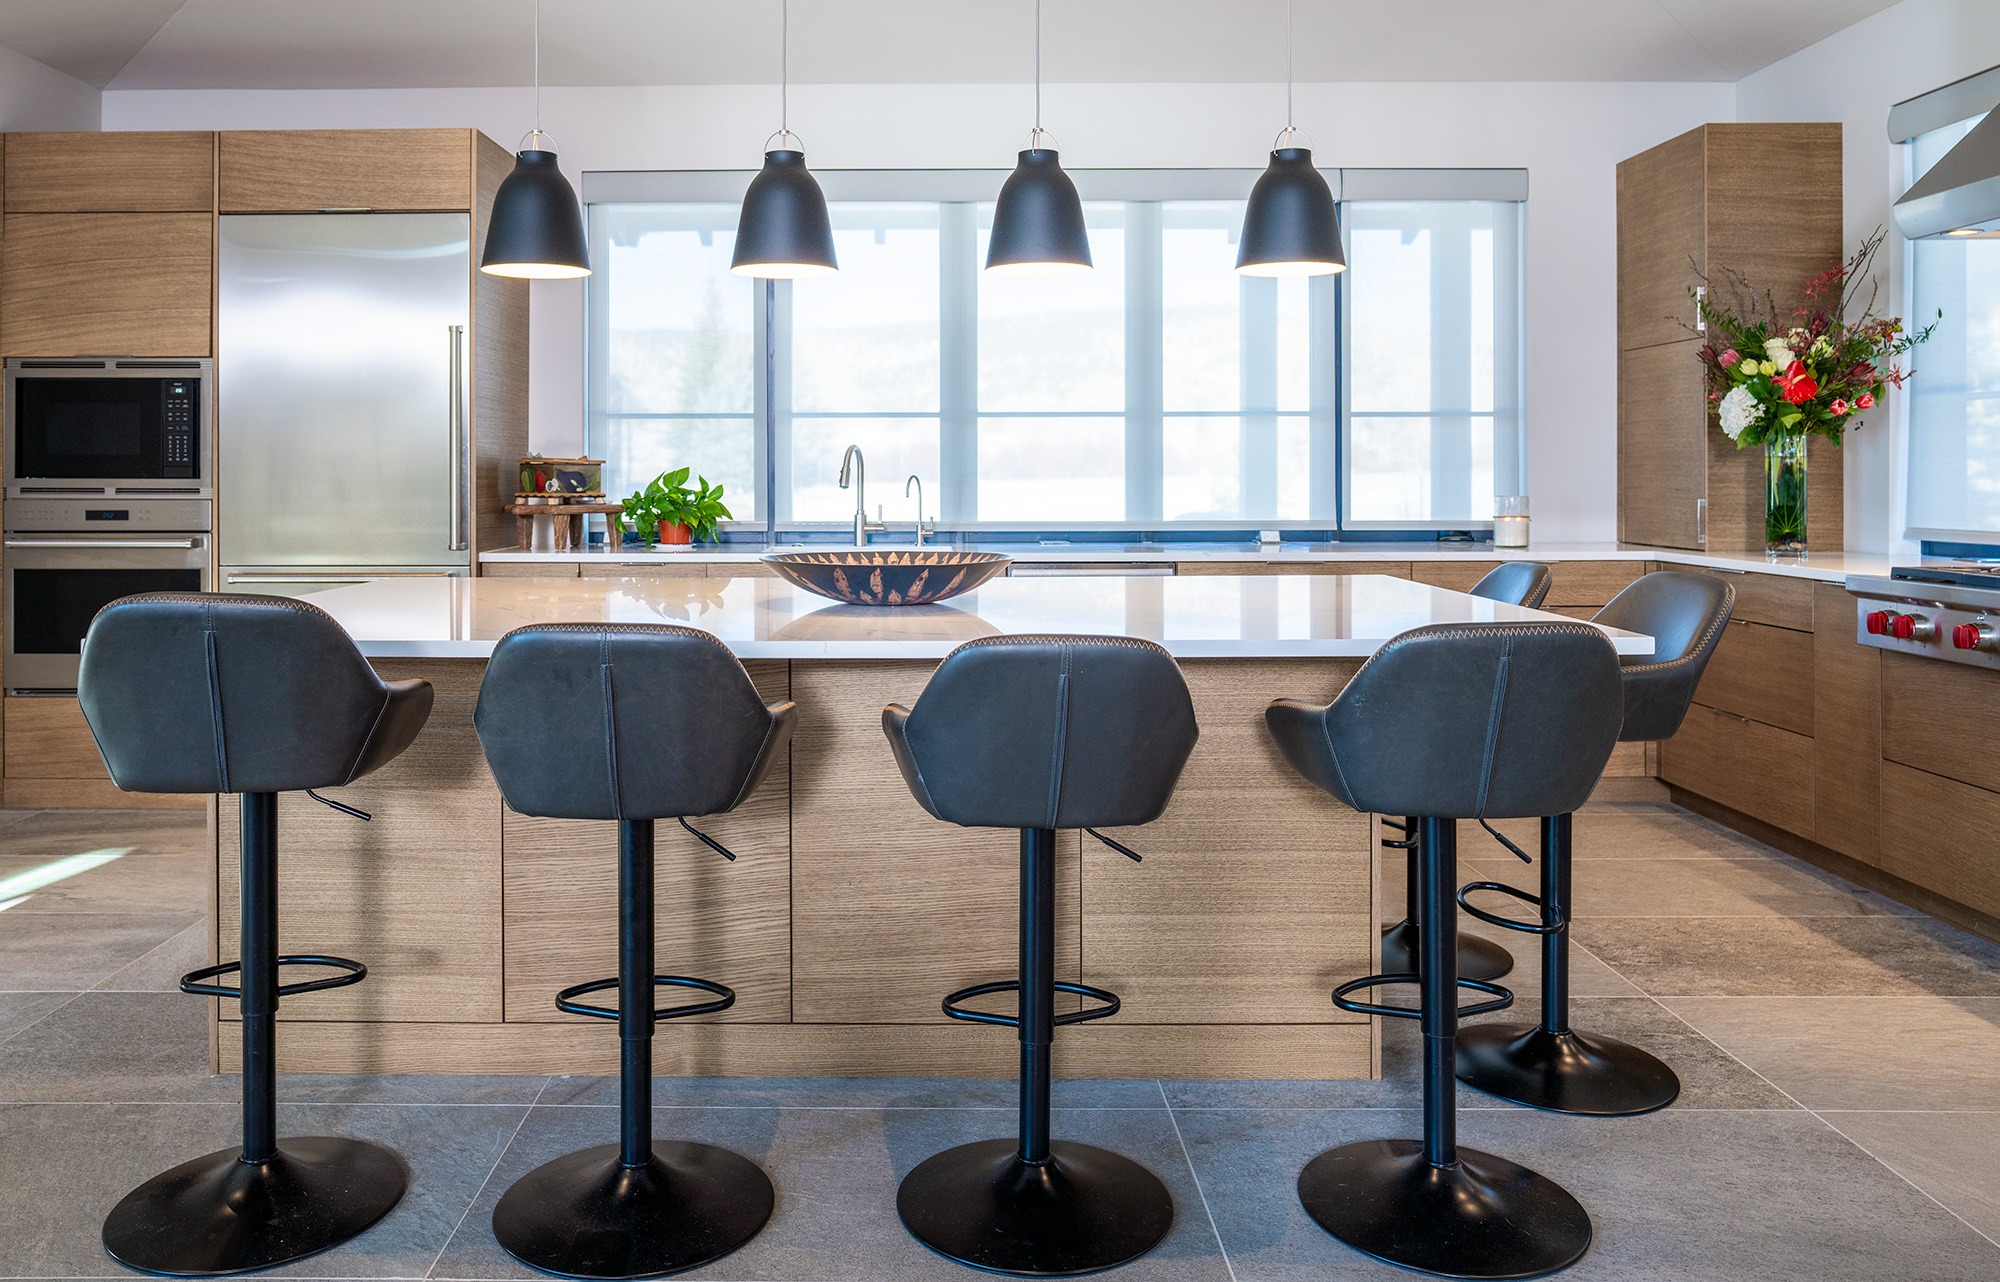 BJD custom home kitchen with barstools, countertop, windows backsplash all head on